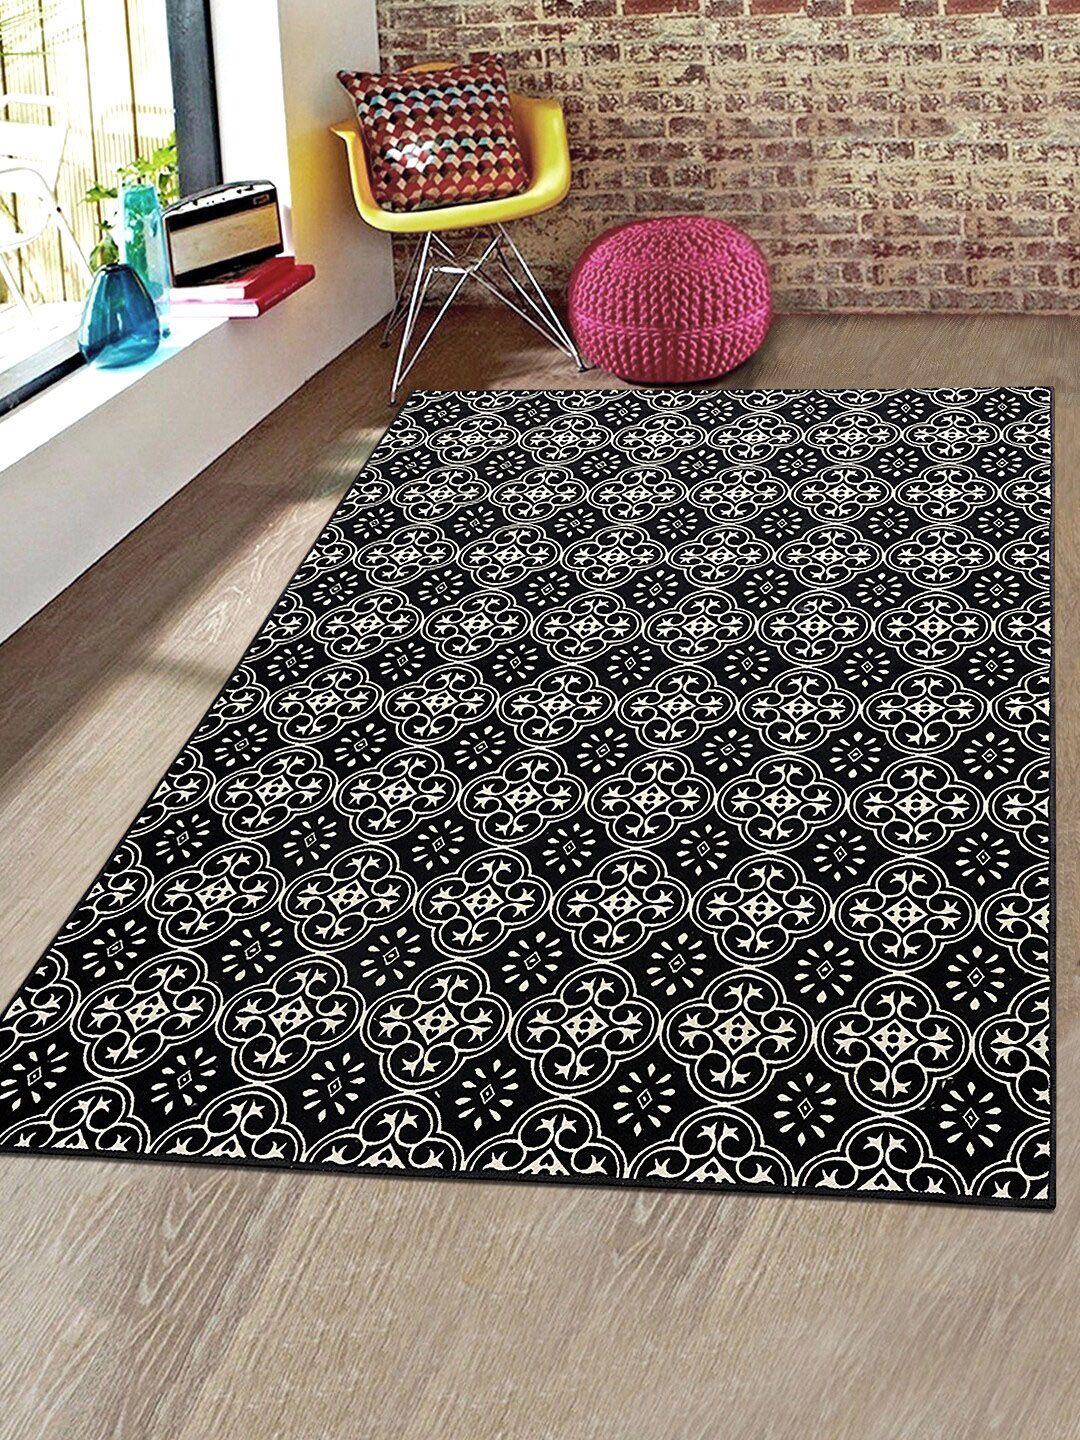 Saral Home Black & White Floral Printed Anti-Skid Carpet Price in India